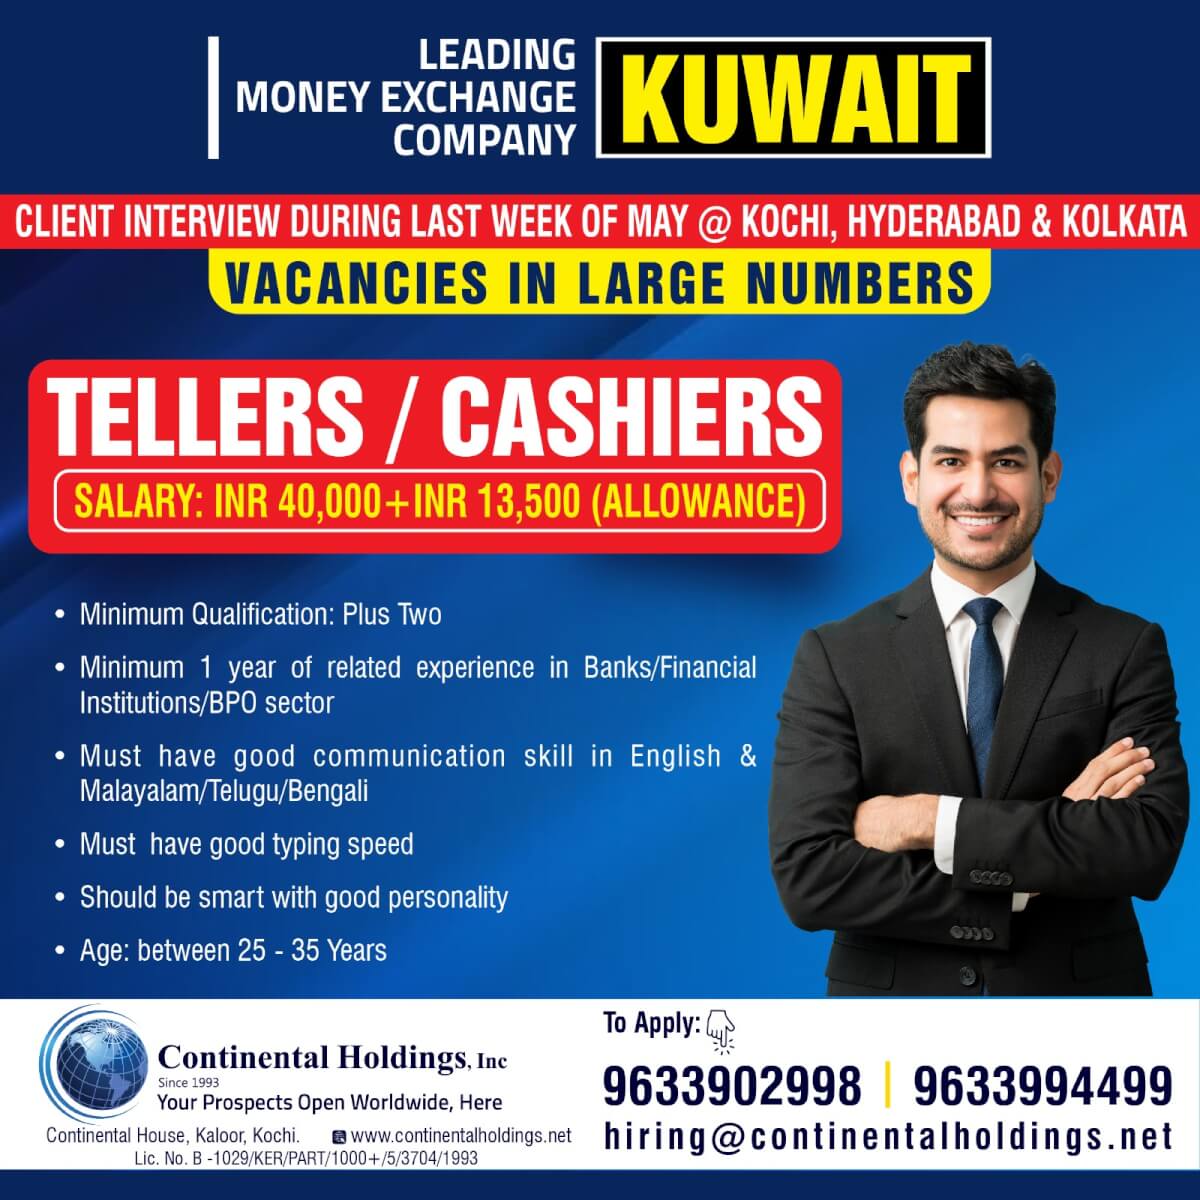 Hiring for Kuwait - Money Exchange - Client Interview at Cochin, Kolkata and Hyderabad